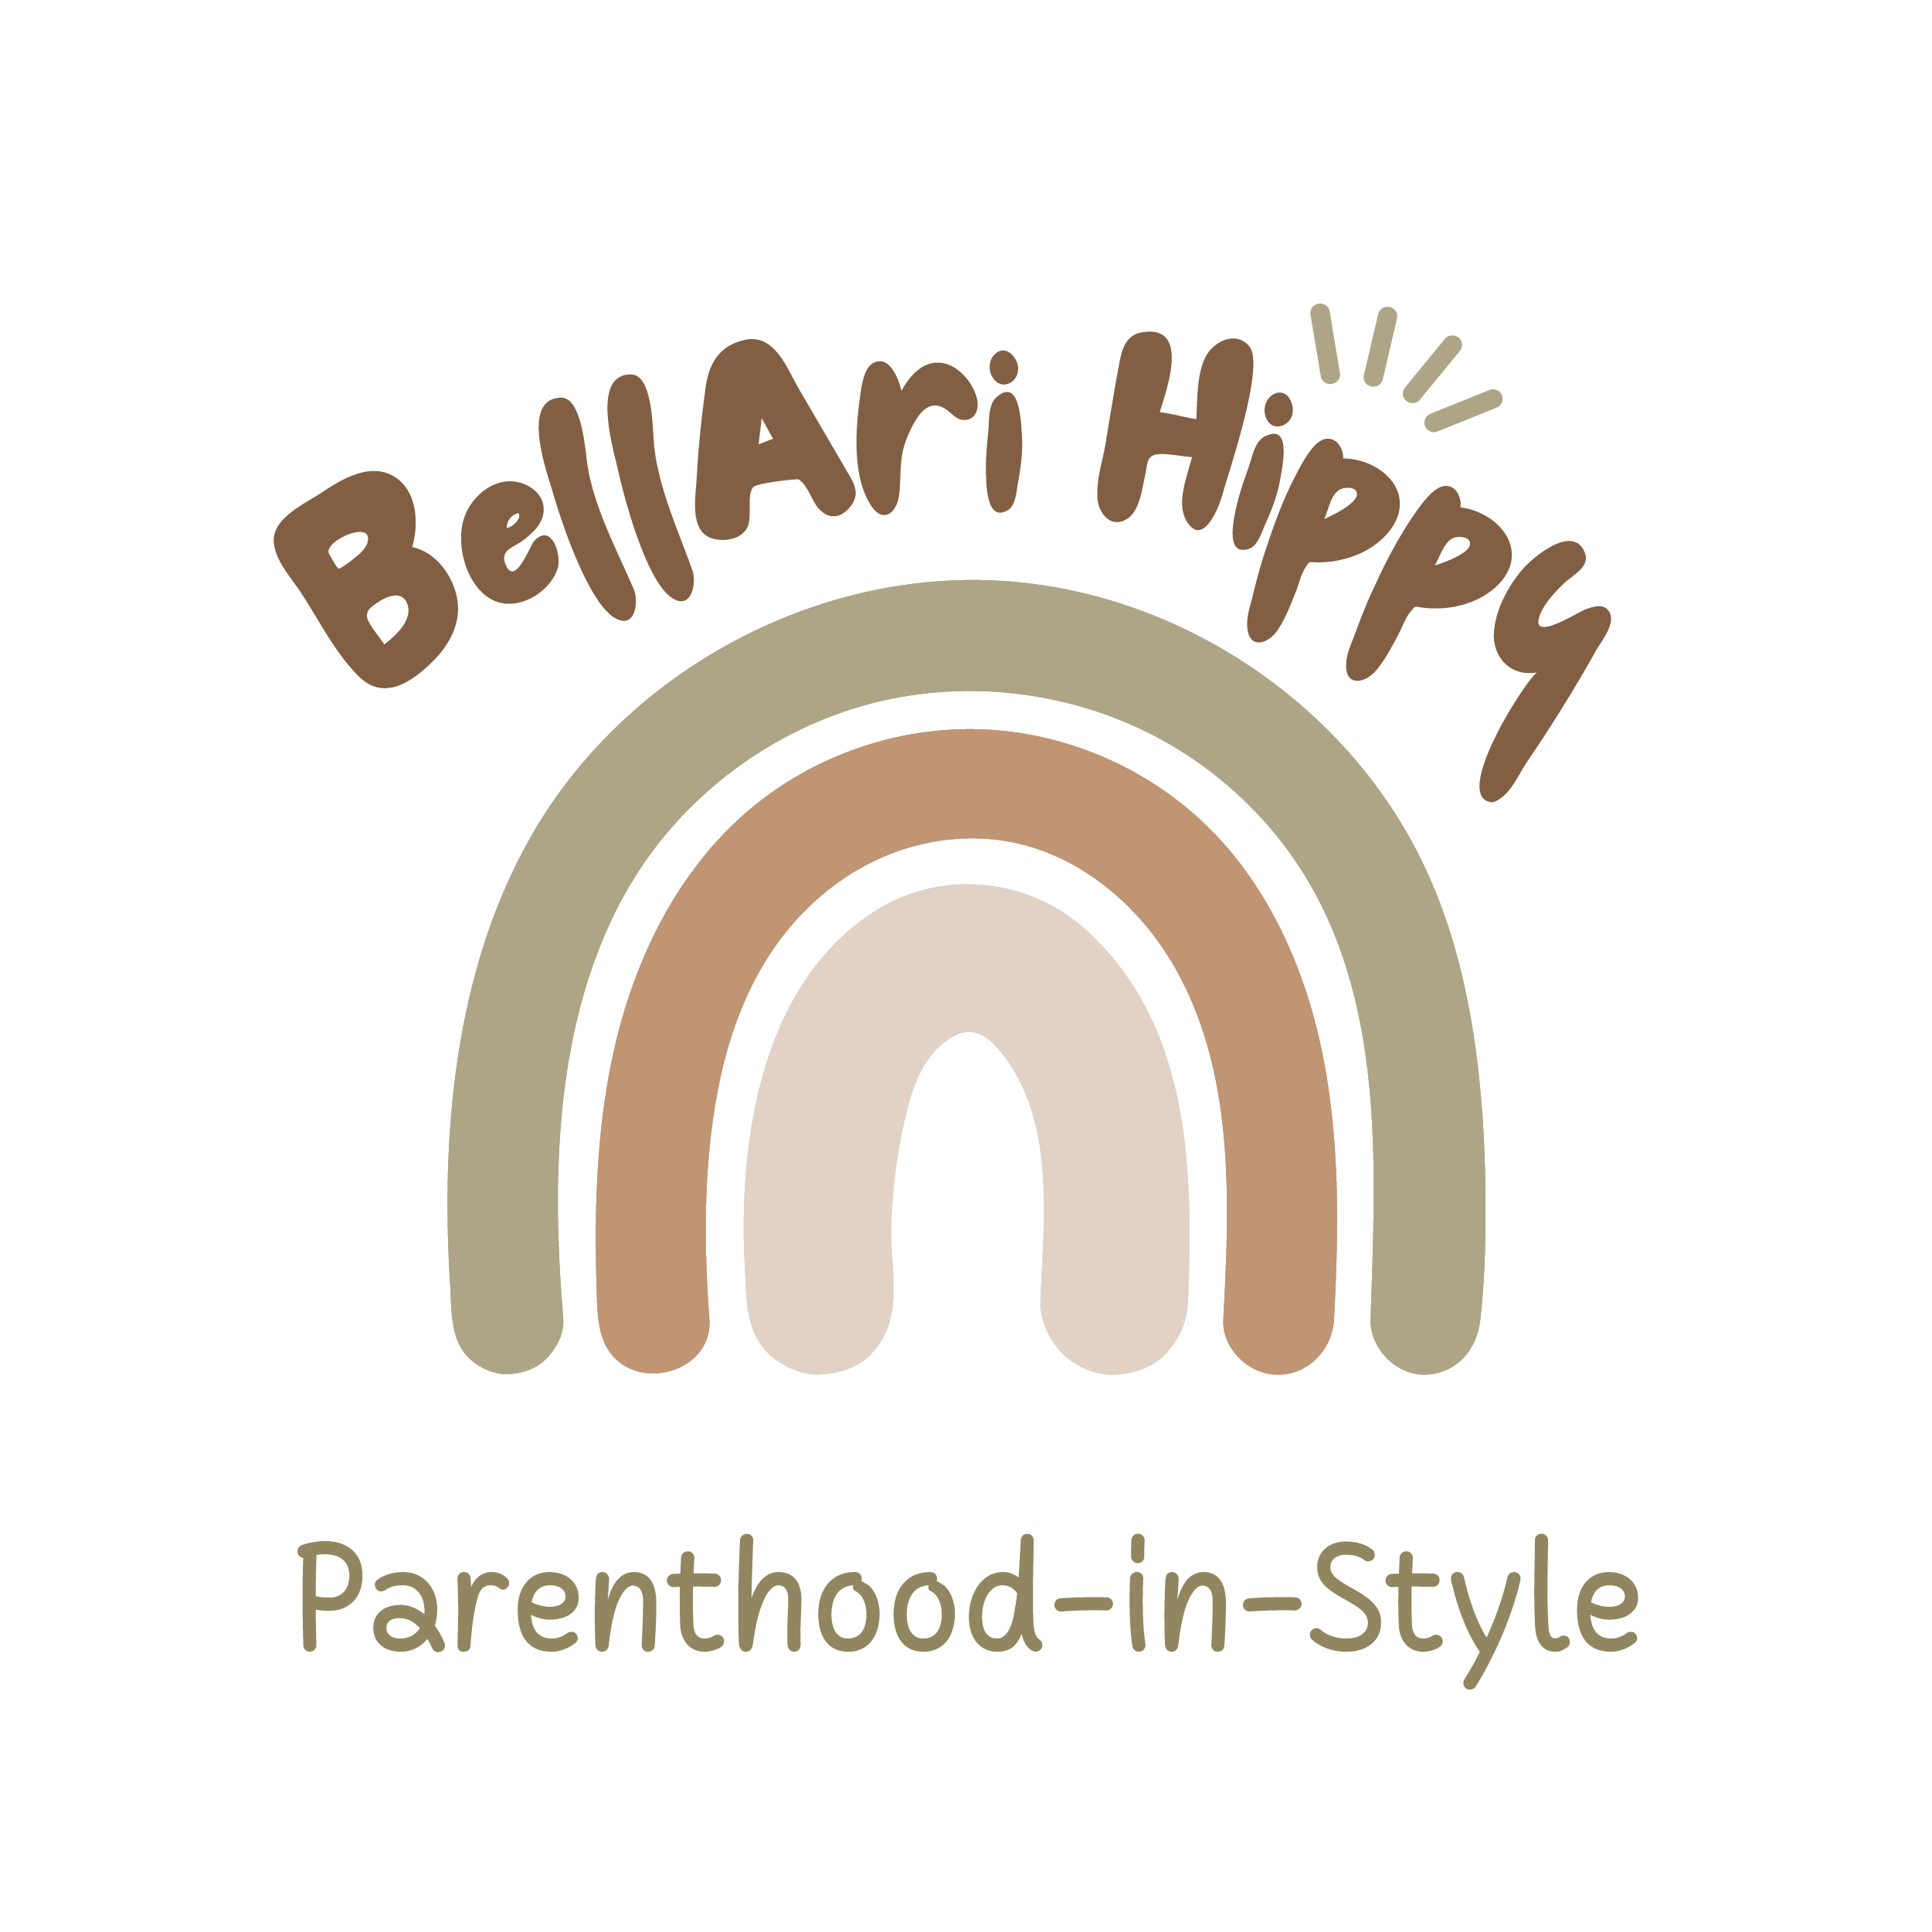 Bellari Hippy